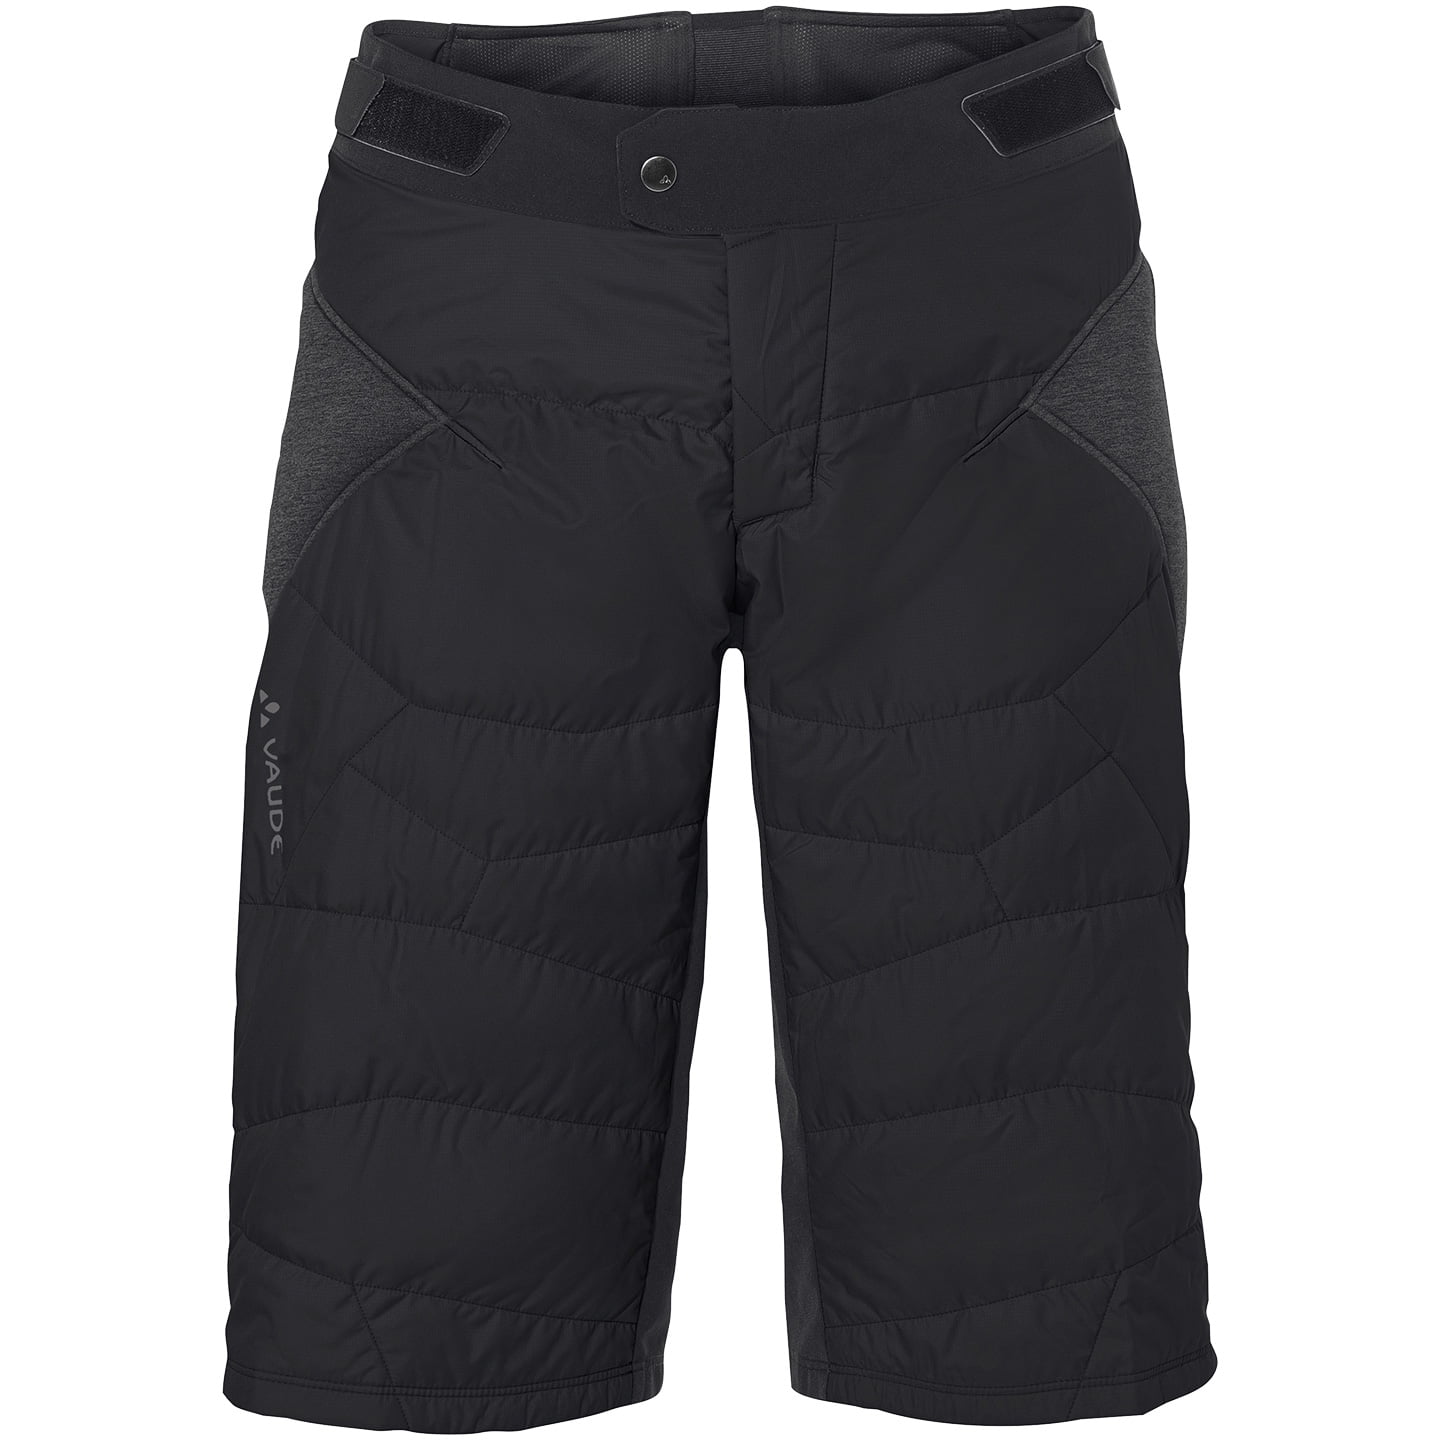 VAUDE Minaki III w/o Pad Bike Shorts, for men, size M, MTB shorts, MTB clothing